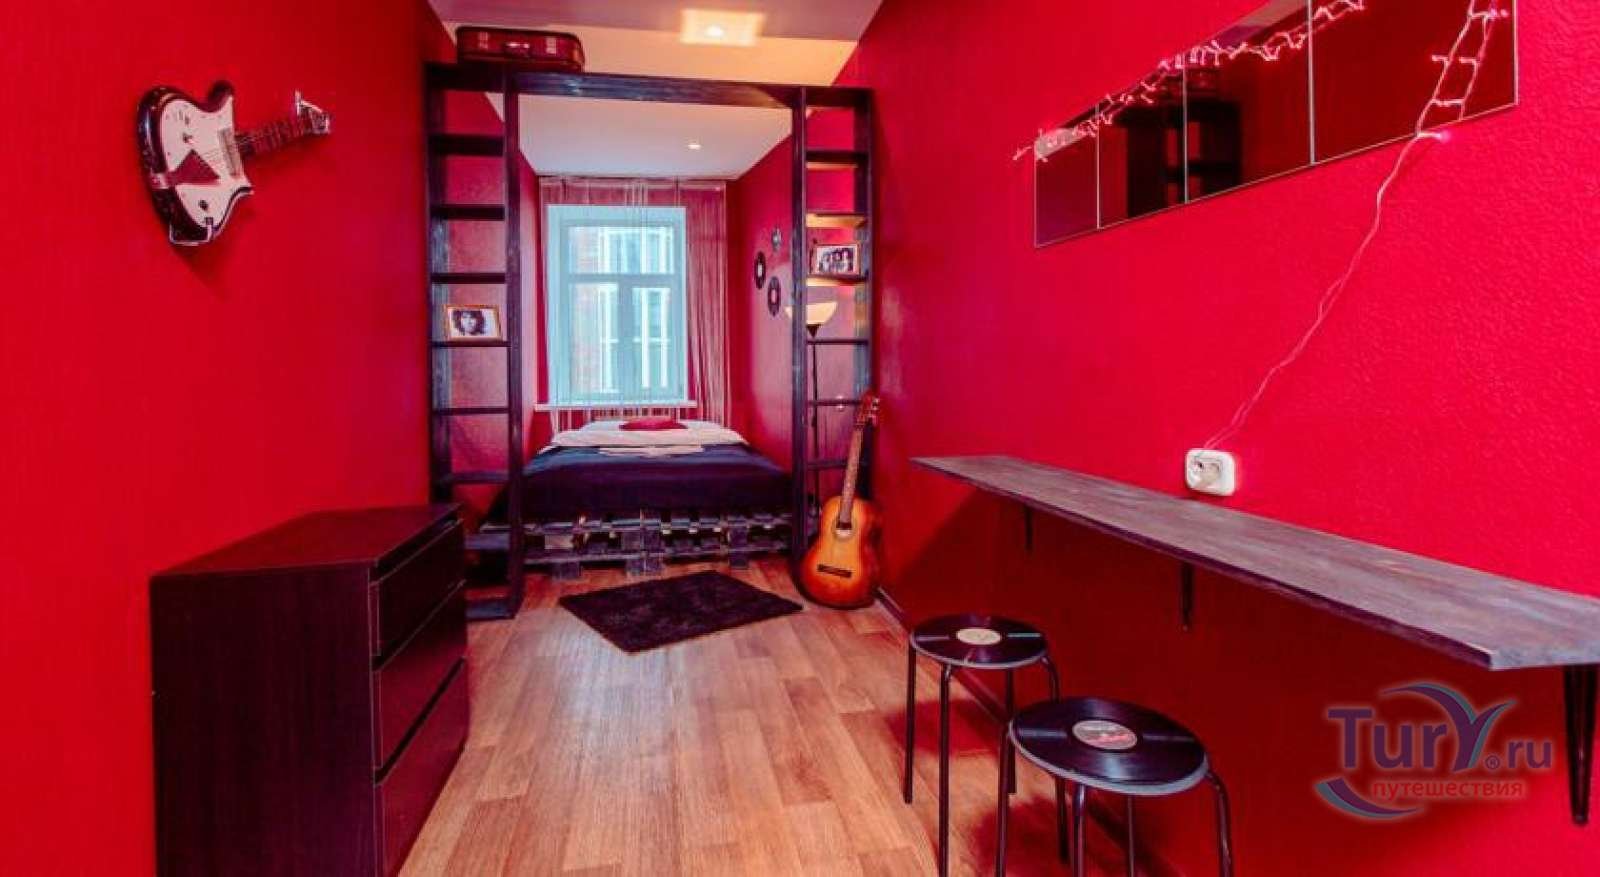 Красная комната игра. Красная комната. Отель с красной комнатой в СПБ. Комнота в чёрно Красном стиле. Красная комната Питер.